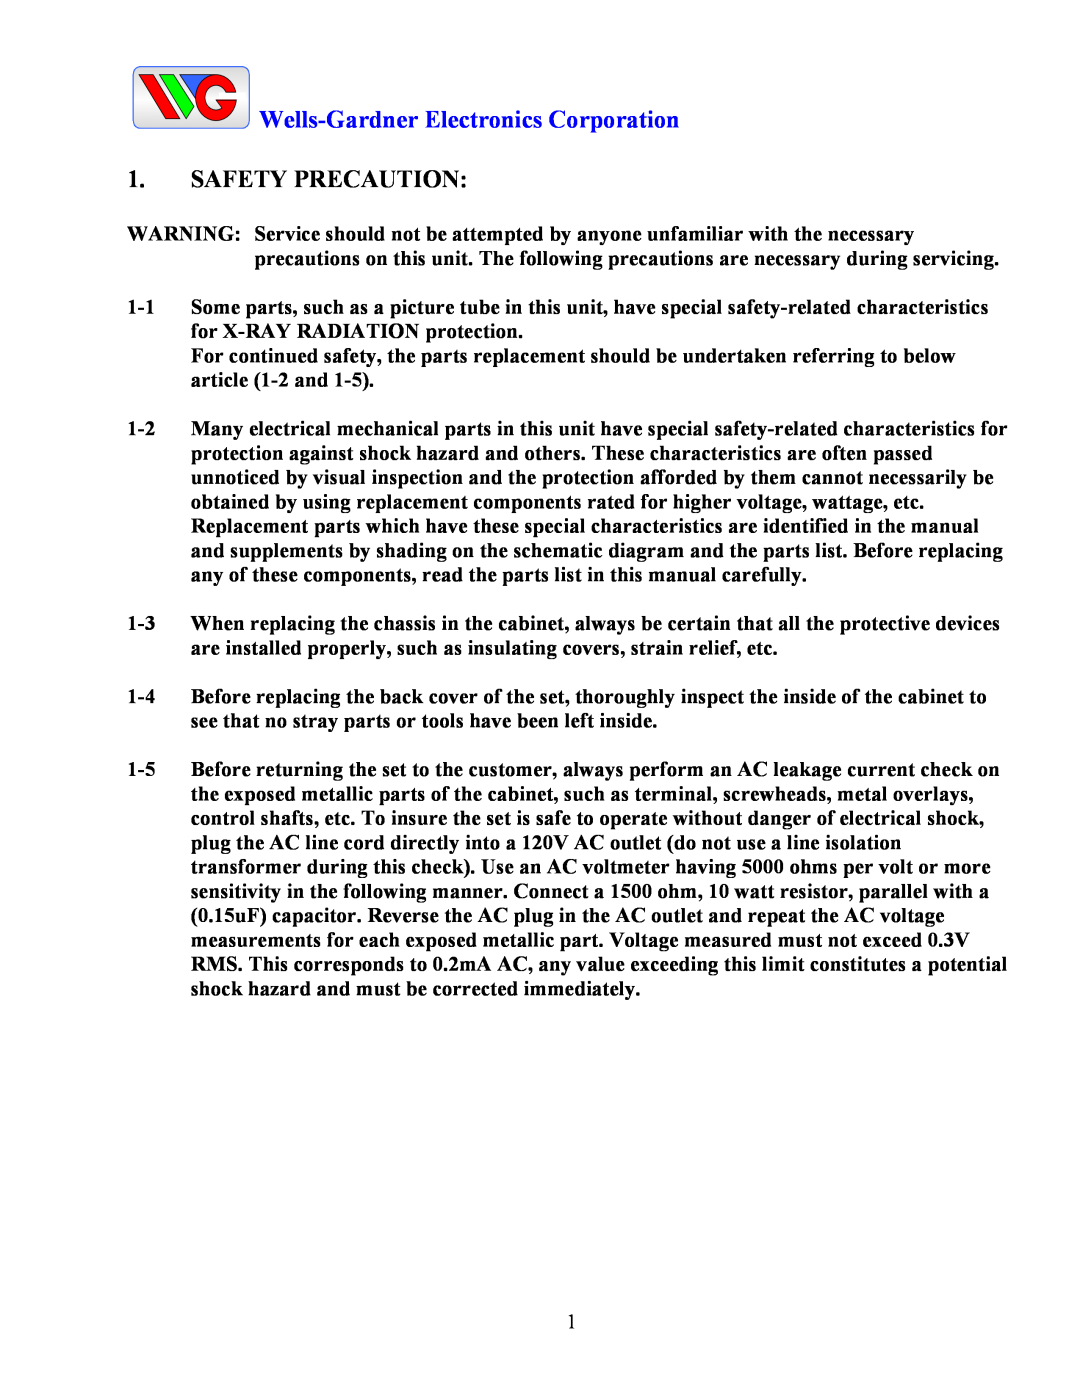 Wells-Gardner D9300 Series service manual Safety Precaution, Wells-Gardner Electronics Corporation 